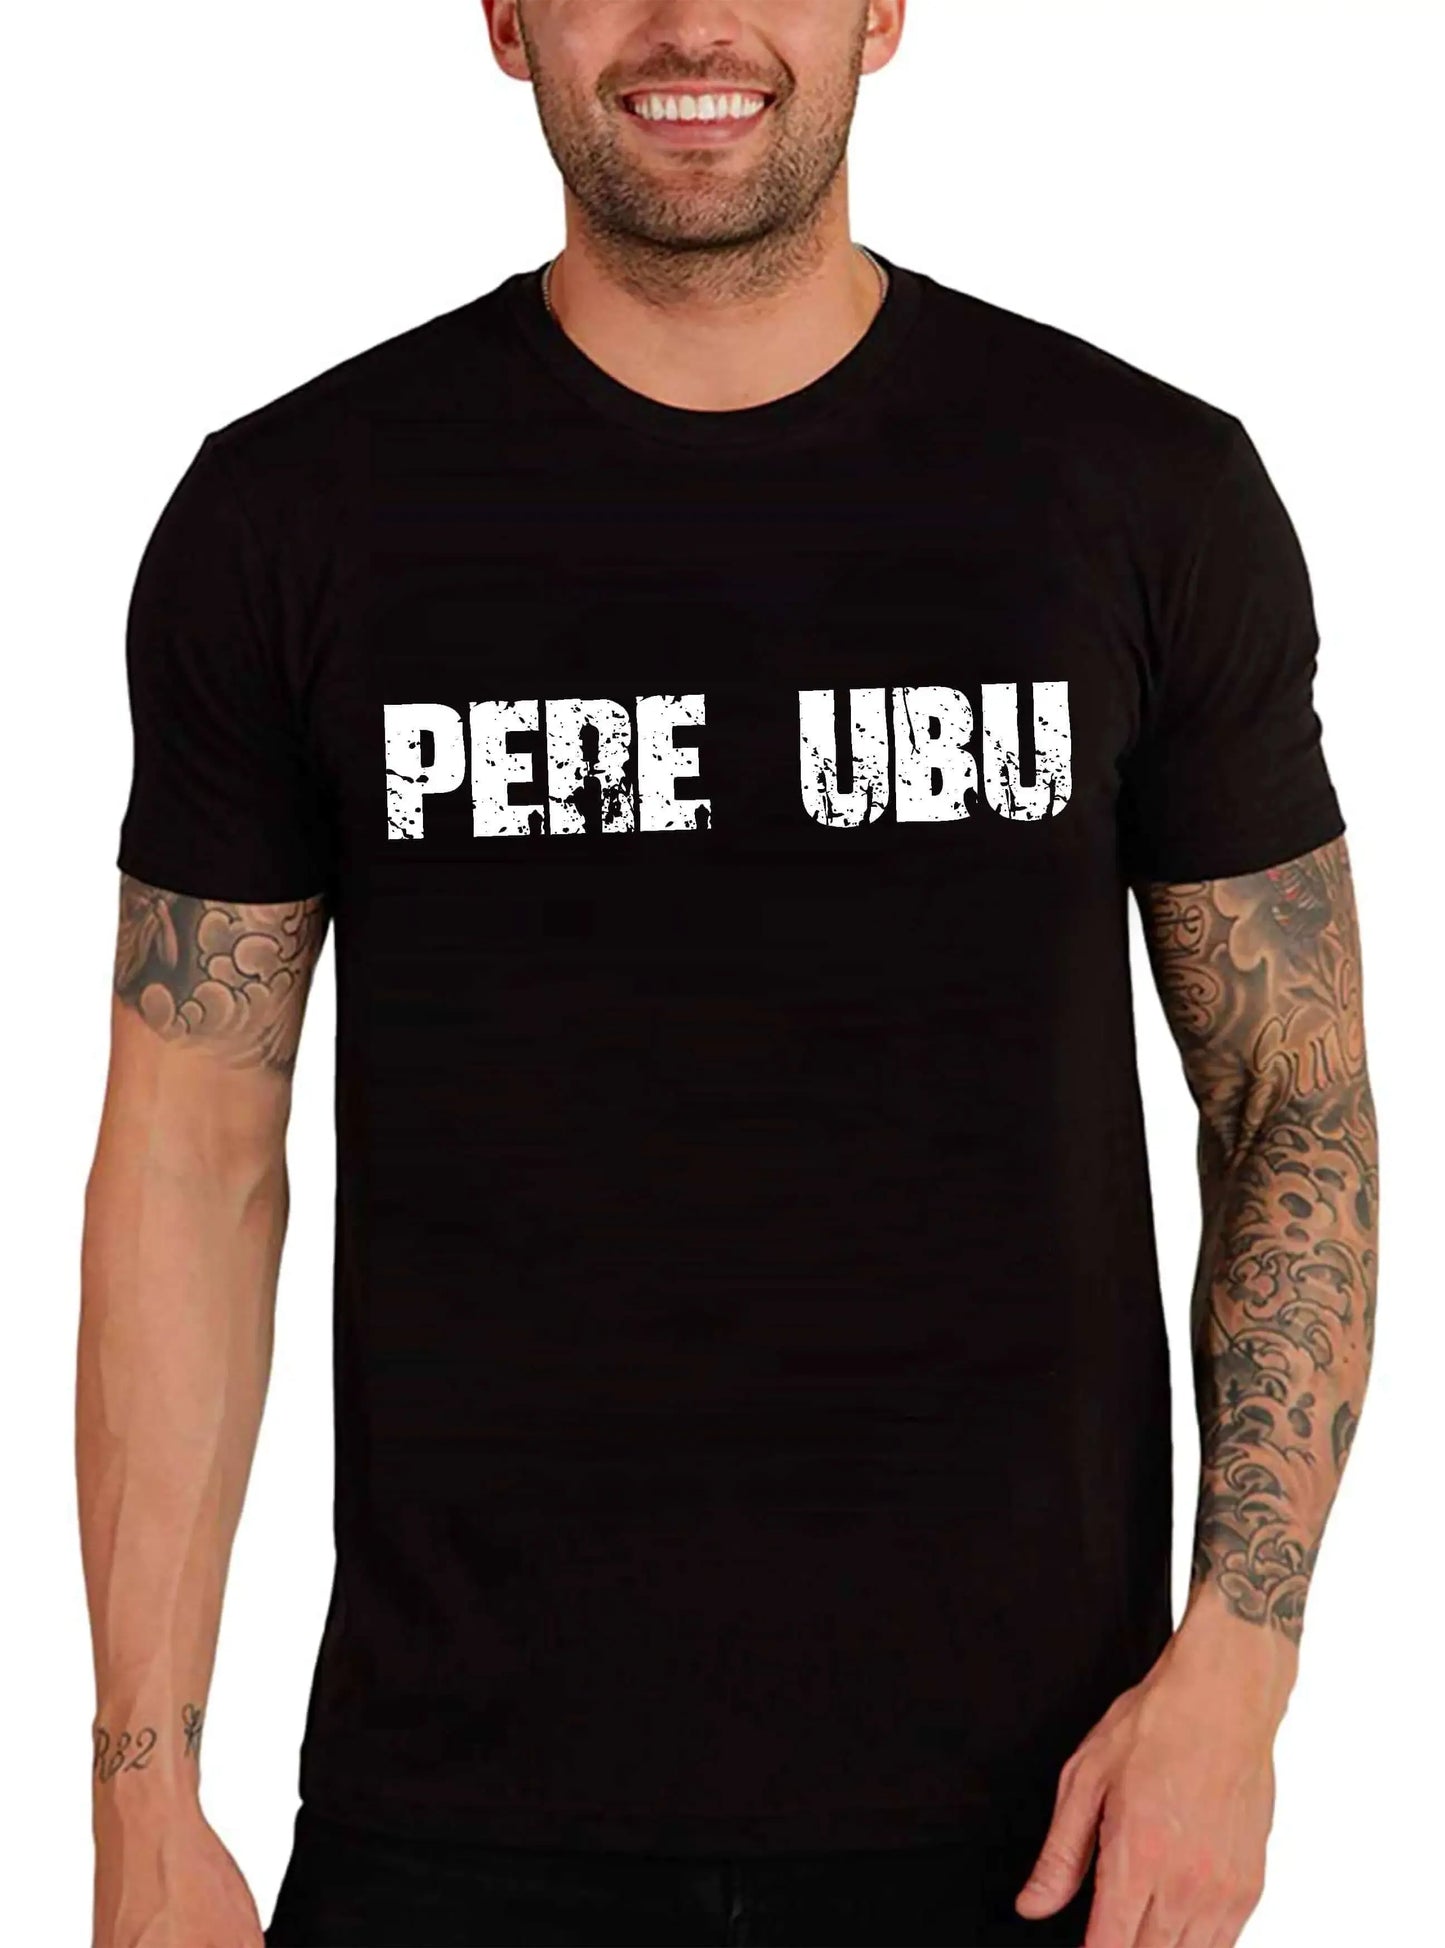 Men's Graphic T-Shirt Pere Ubu Eco-Friendly Limited Edition Short Sleeve Tee-Shirt Vintage Birthday Gift Novelty